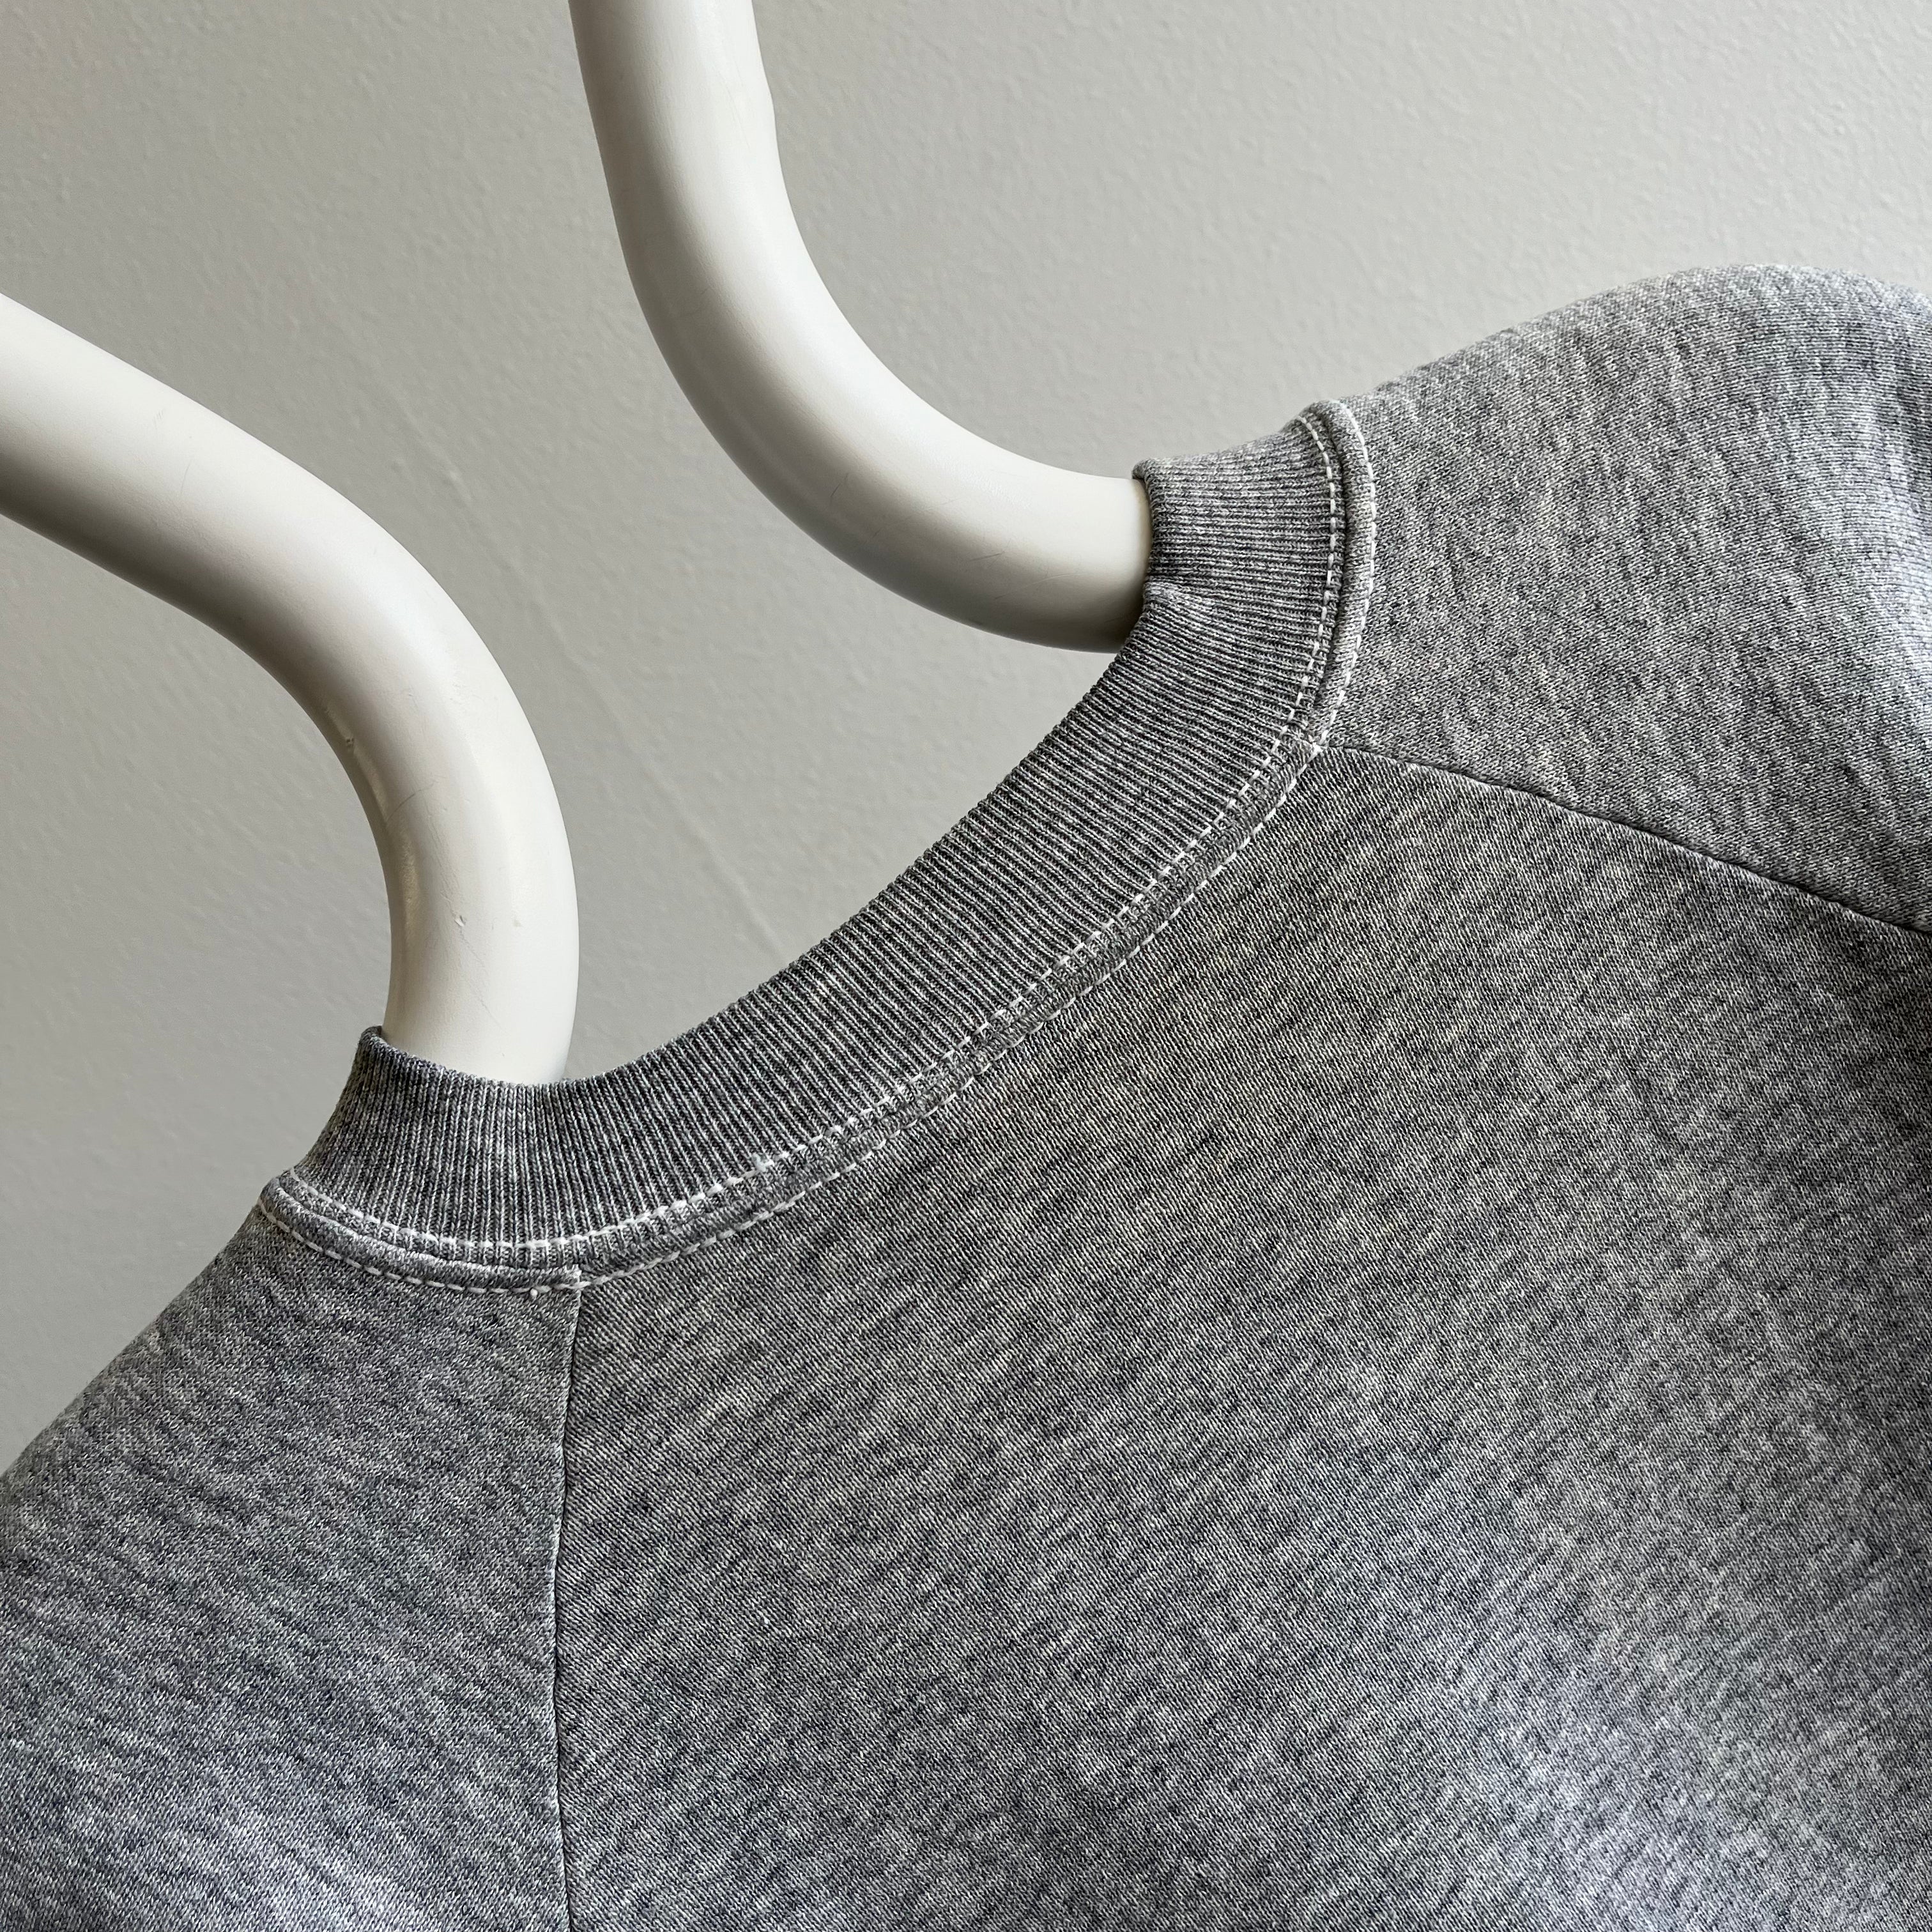 1990s FOTL Blank Gray Sweatshirt with Contrast Stitching